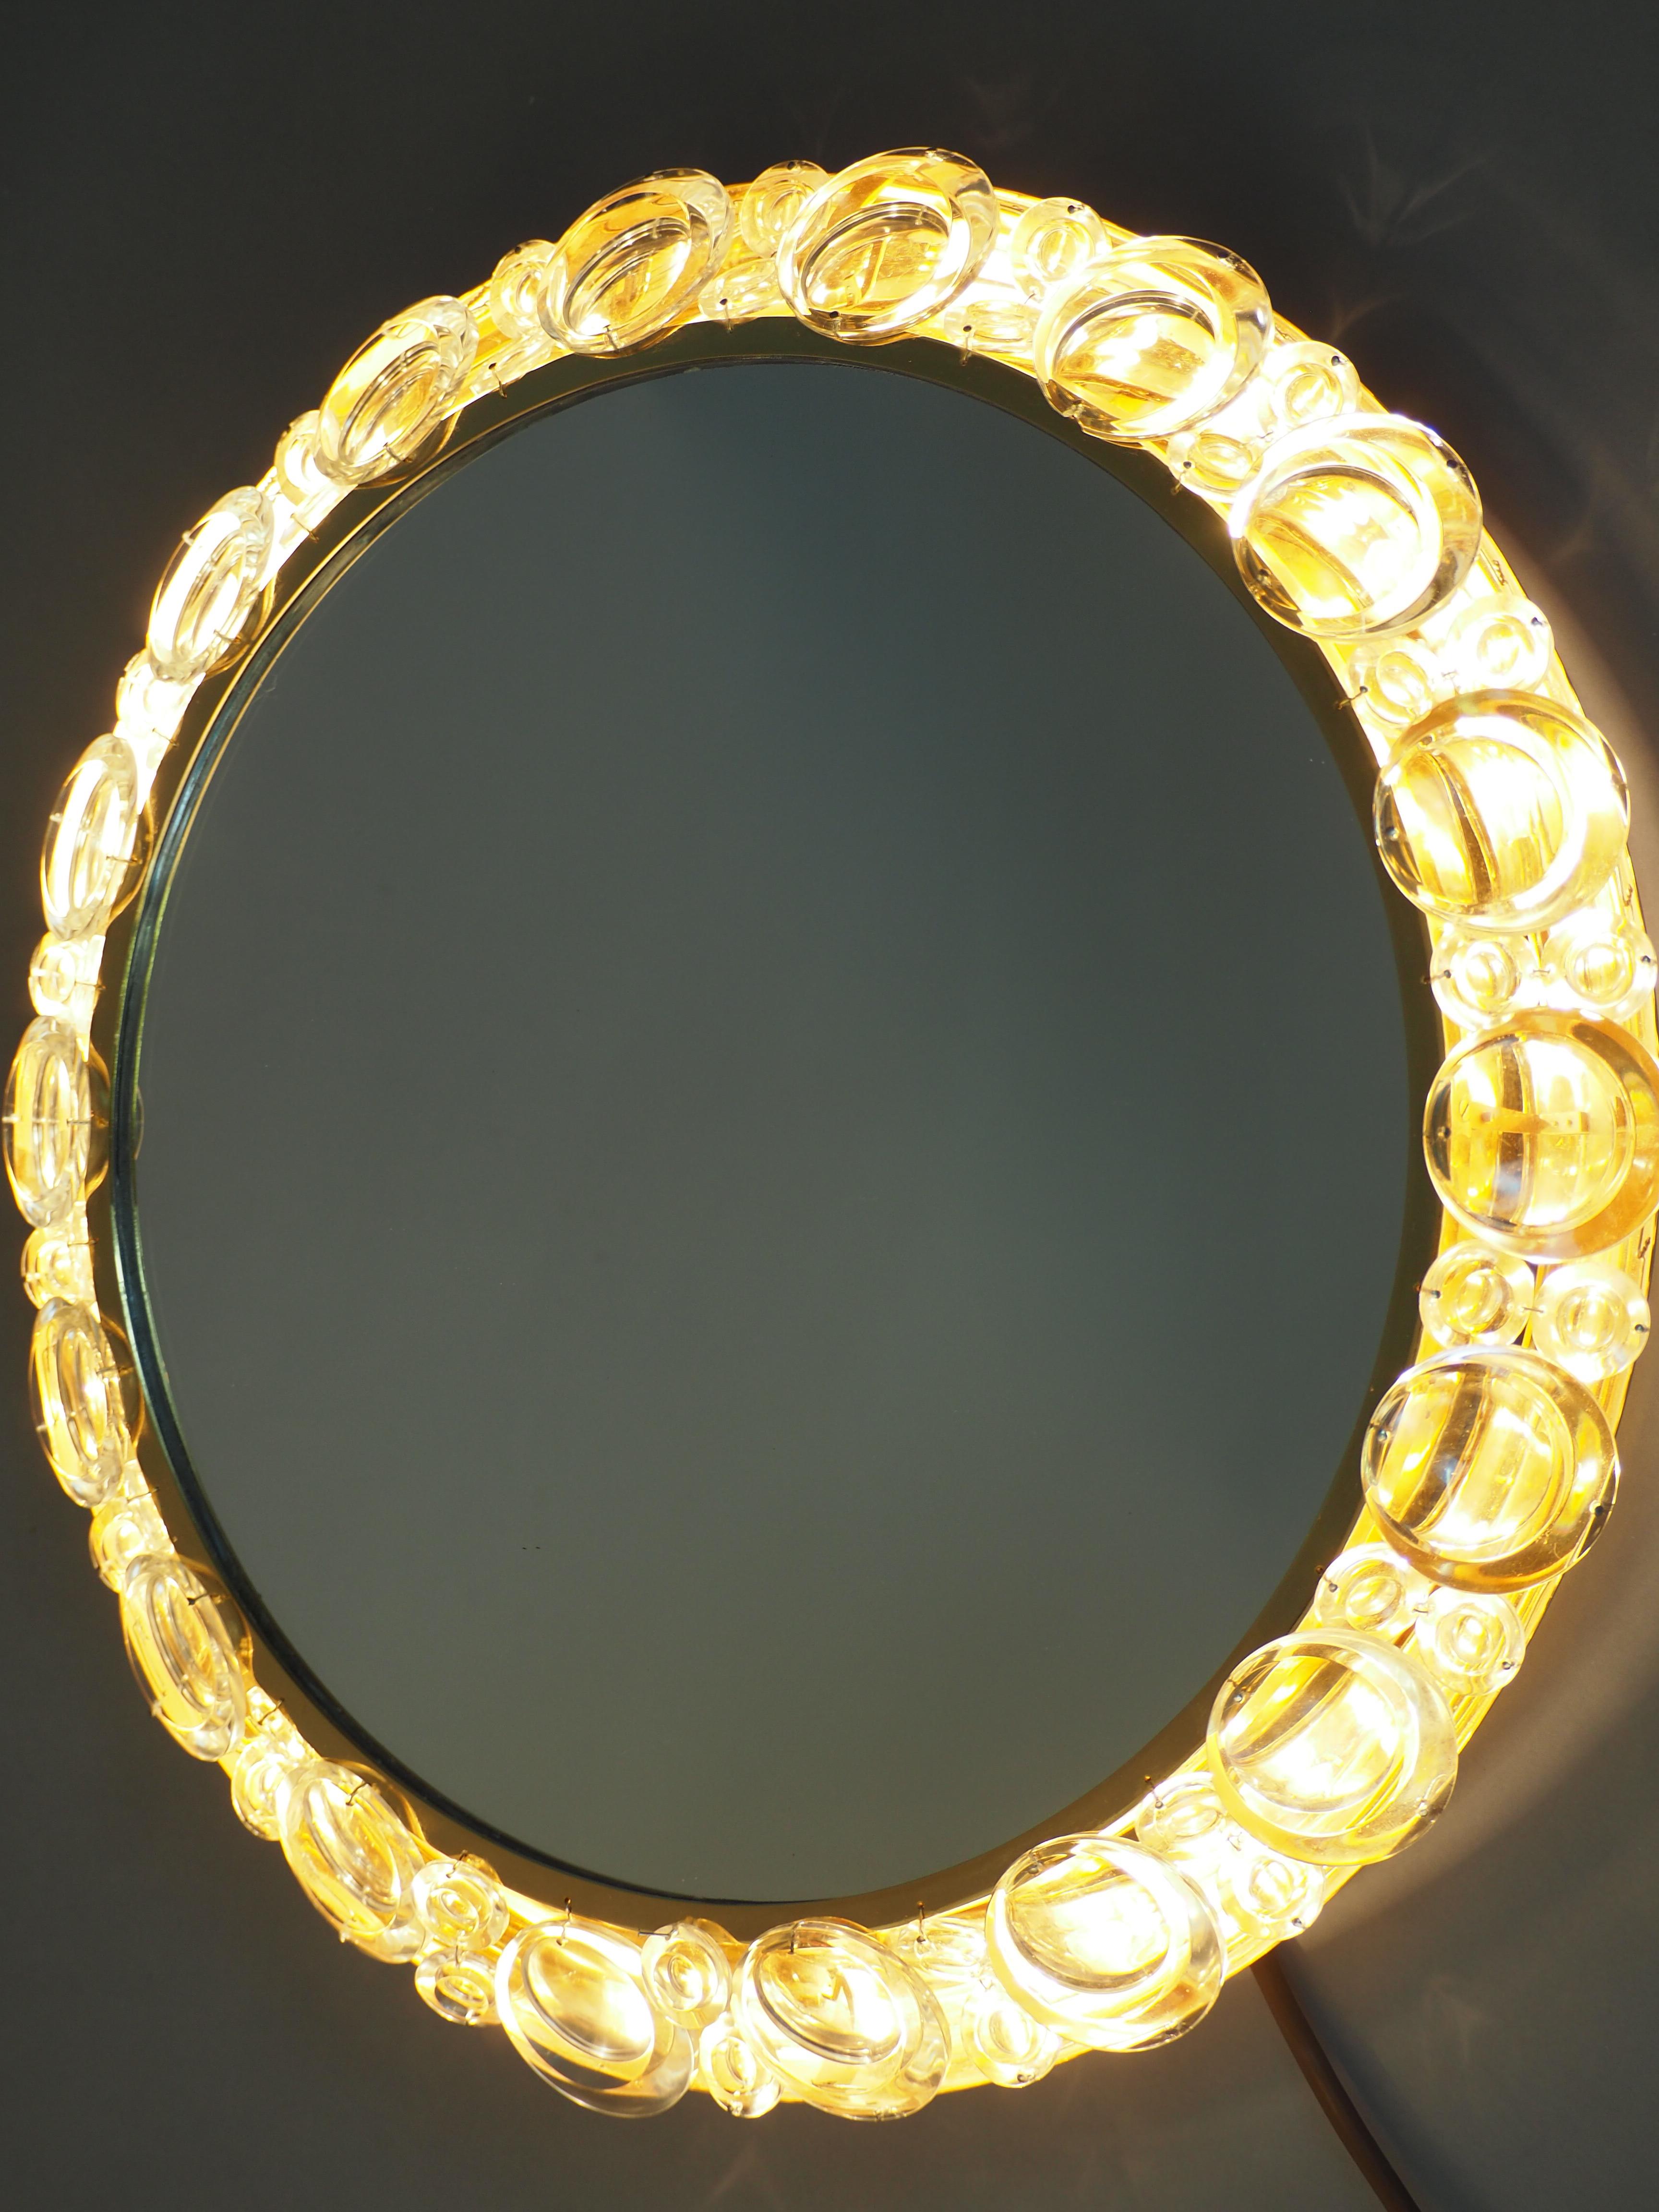 Mid-Century Modern Circular Round Illuminated Gilt Brass and Glass Mirror by Palwa, circa 1970s